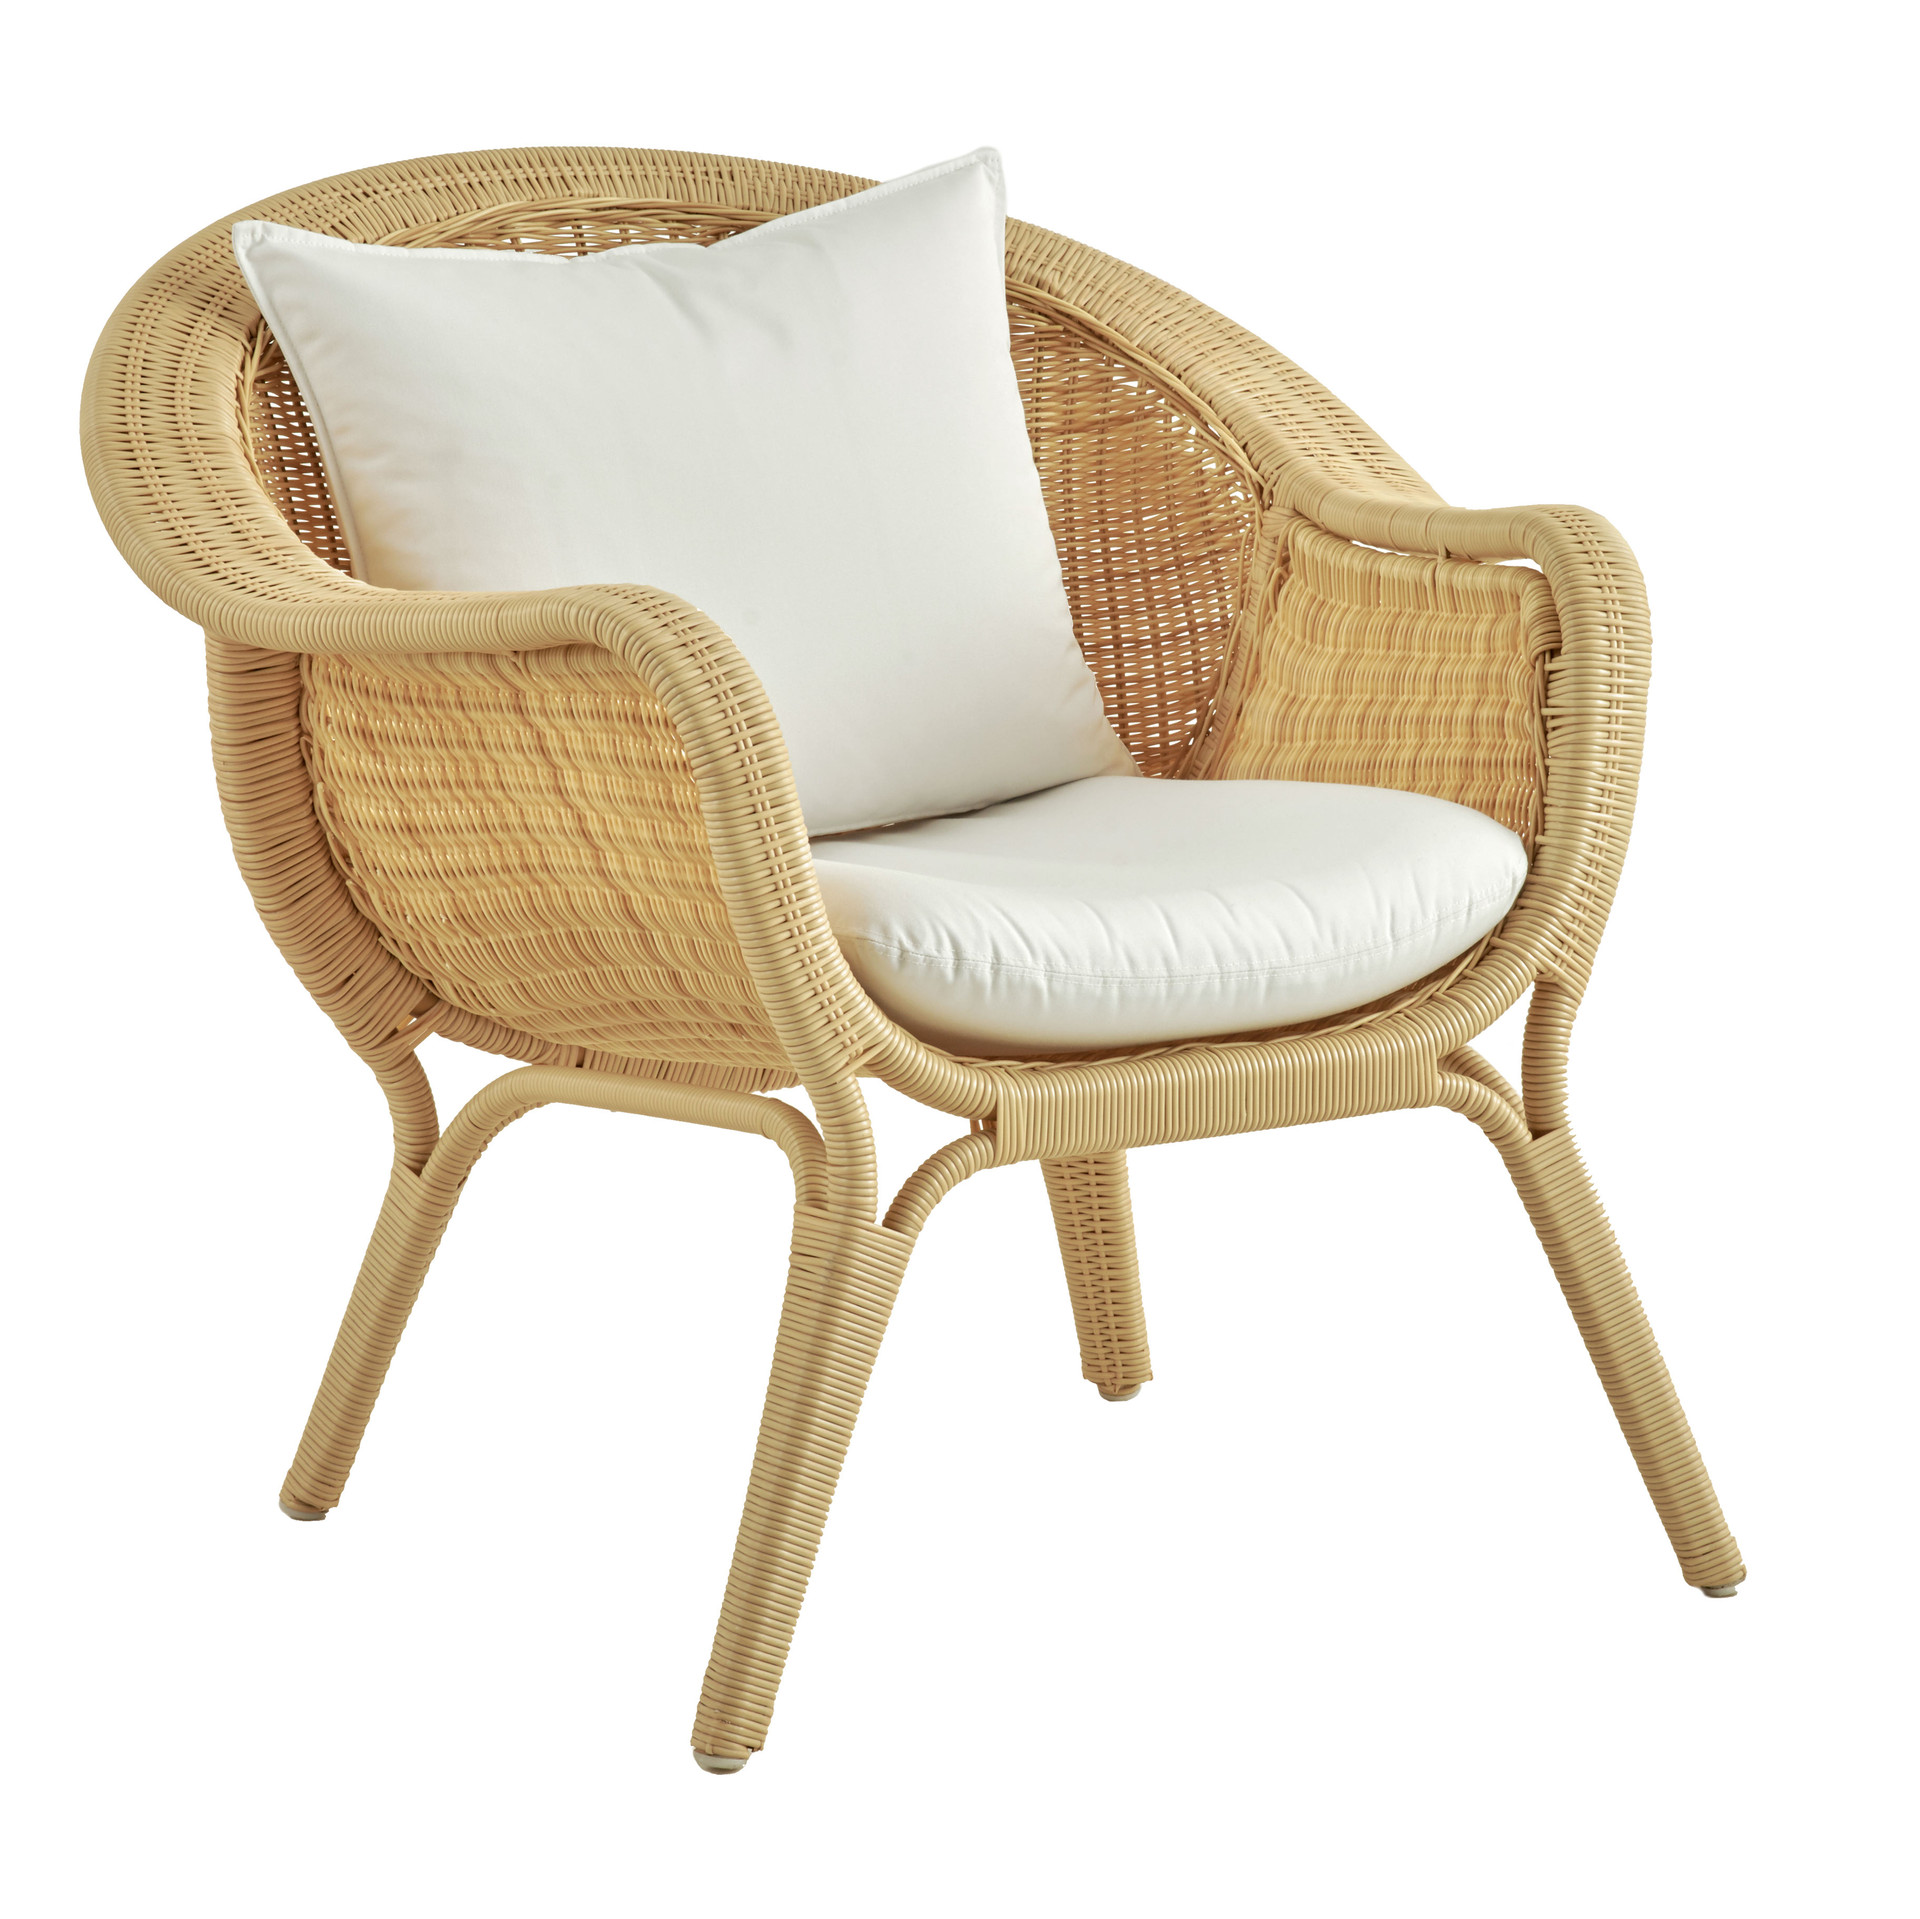 Sika Design Madame Exterior Outdoor - Chair Chair Ditzel Nanna Patio